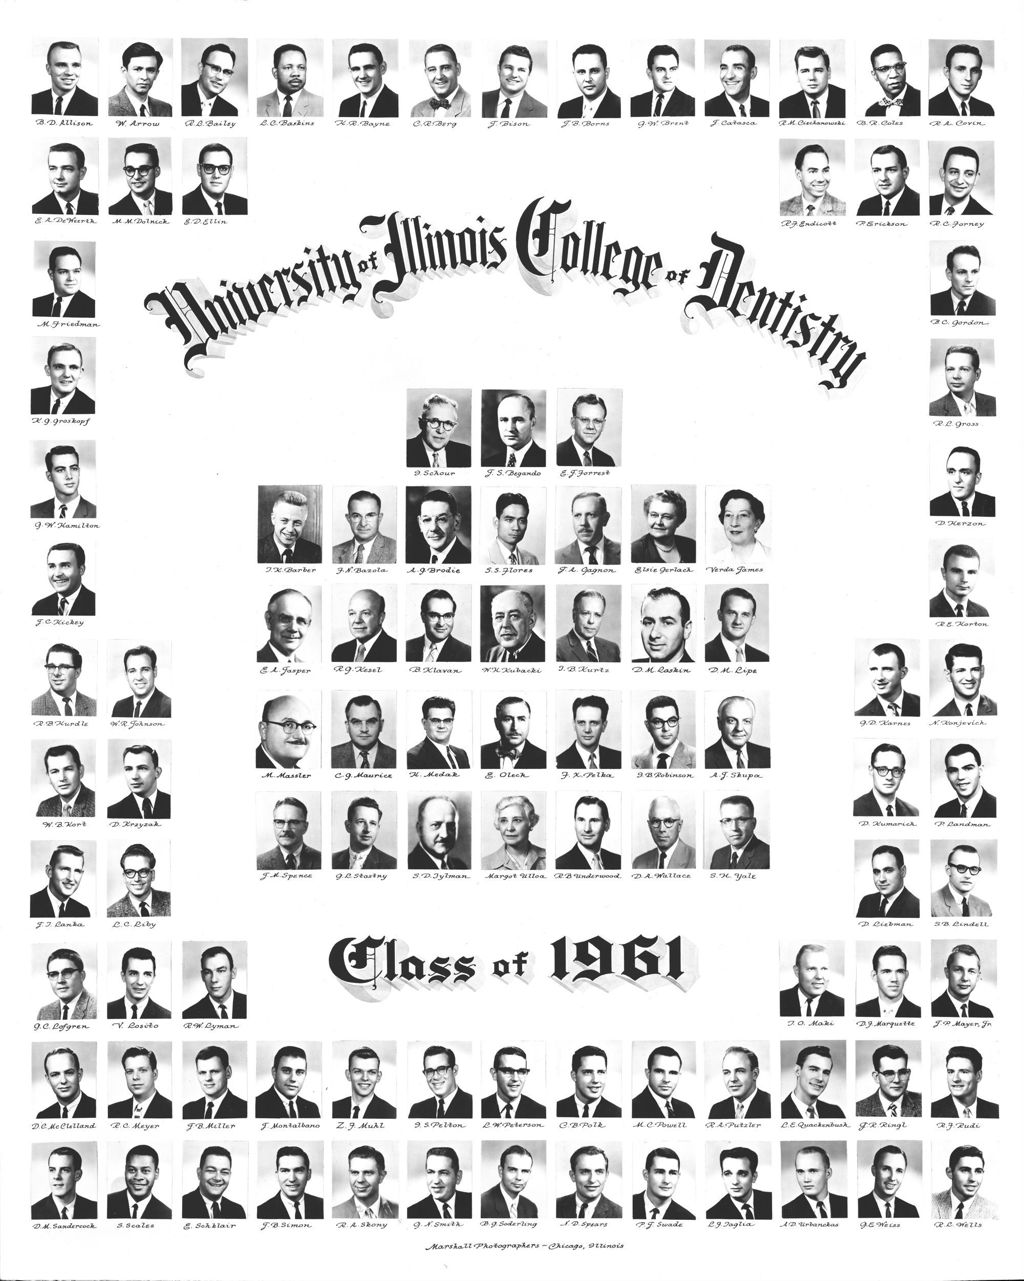 Miniature of 1961 graduating class, University of Illinois College of Dentistry